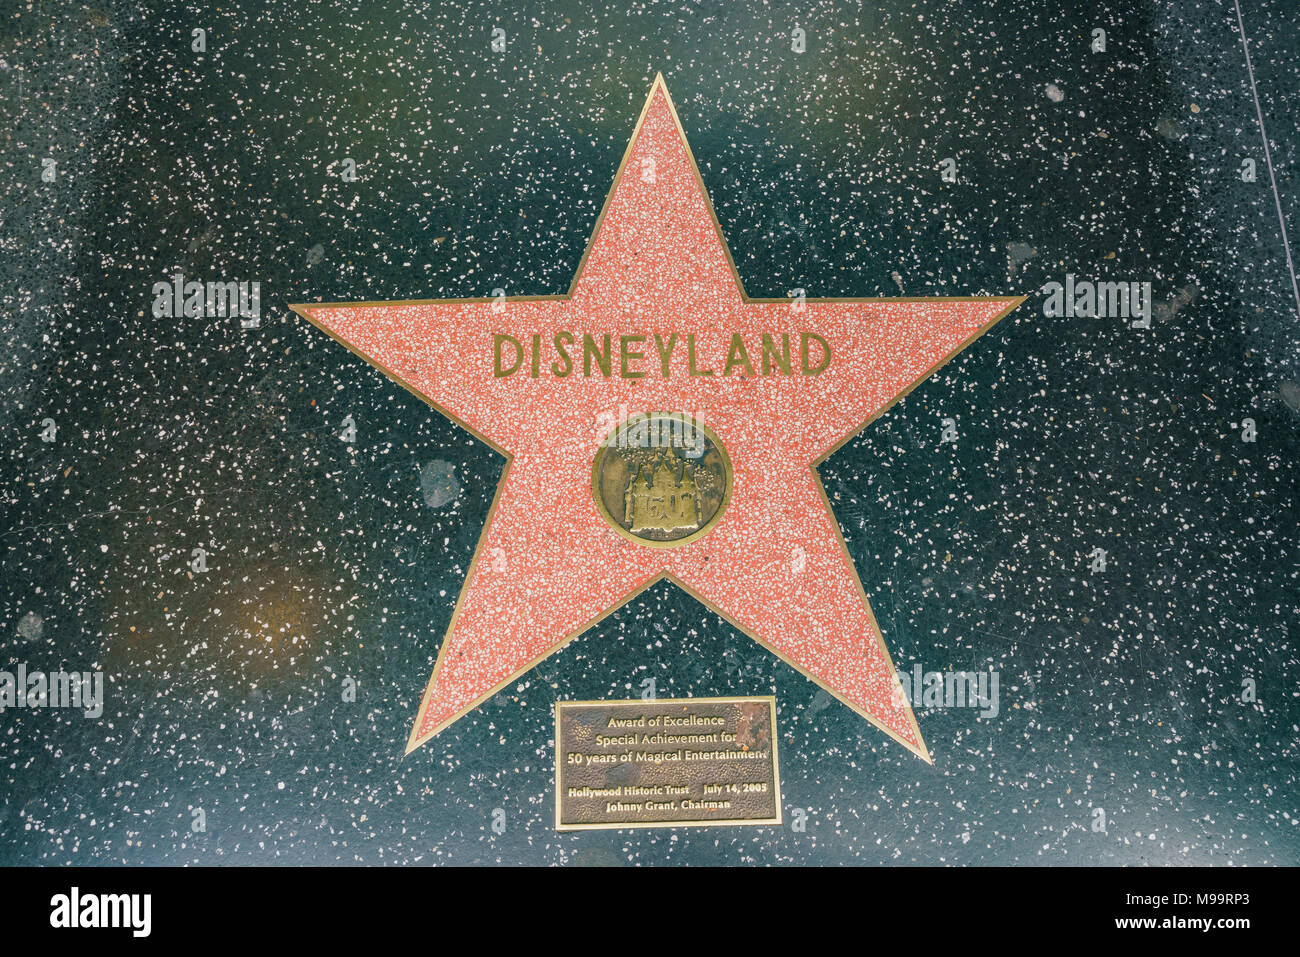 Los Angeles, JUN 23: Star Walk of Fame of the famous Disneyland on JUN 23, 2017 at Los Angeles, California Stock Photo